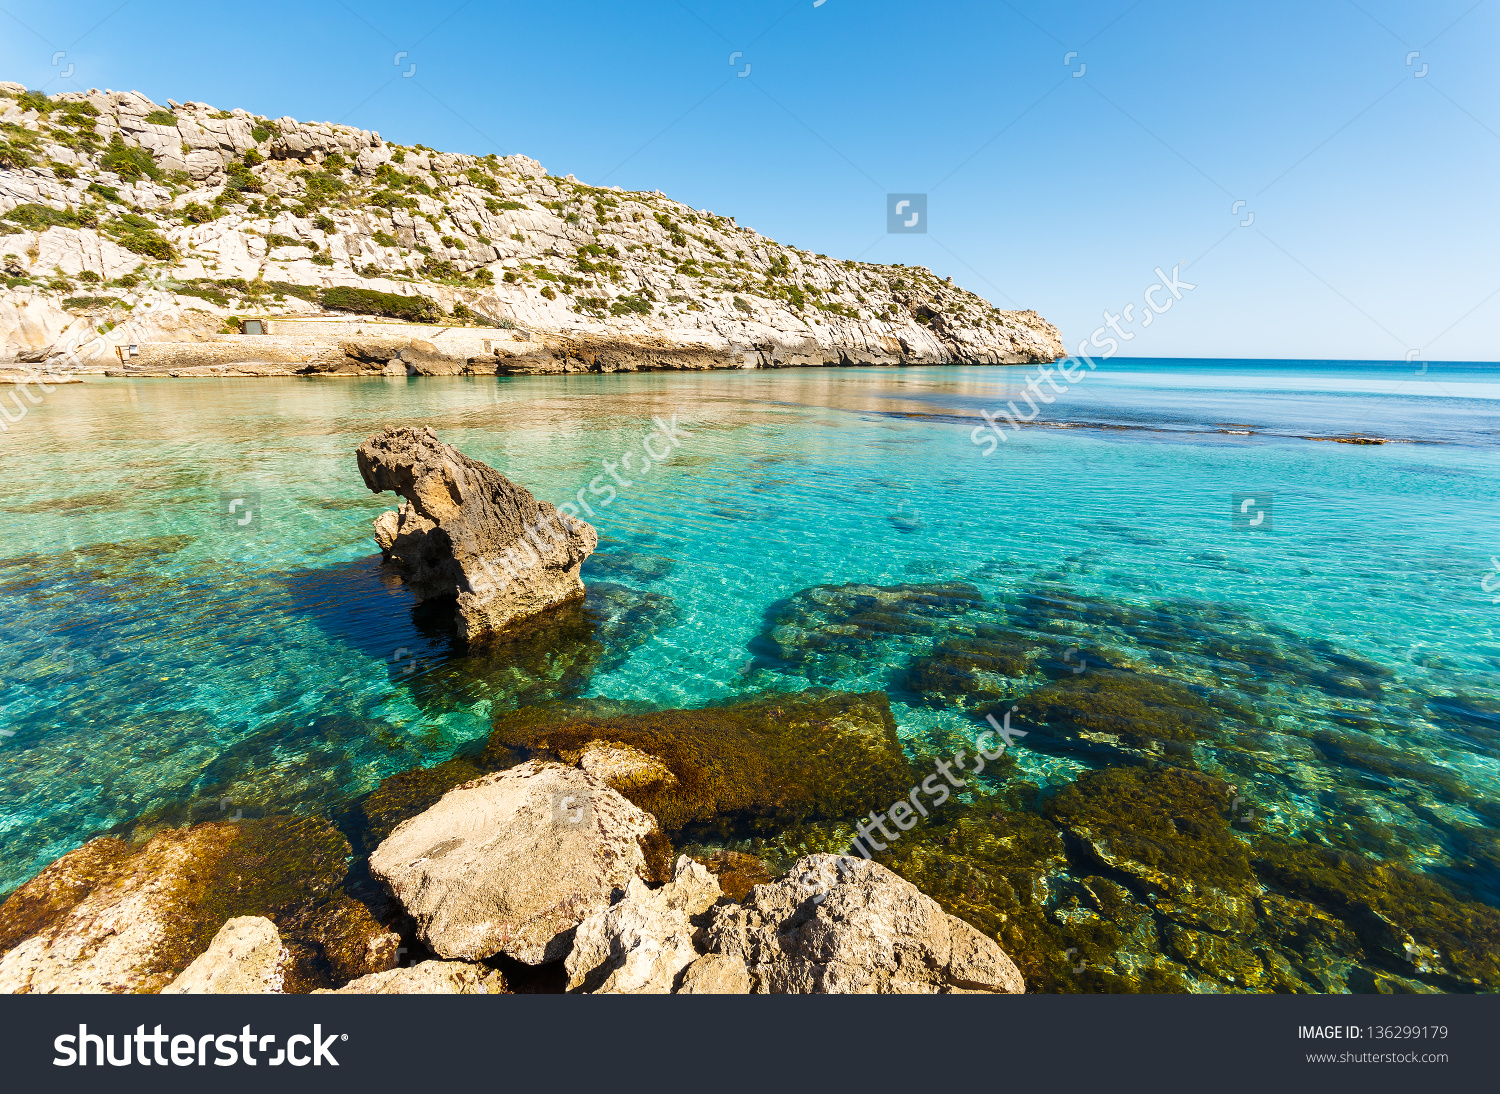 Turquoise Sea Water Of Cala San Vicente Beach, Majorca Island.